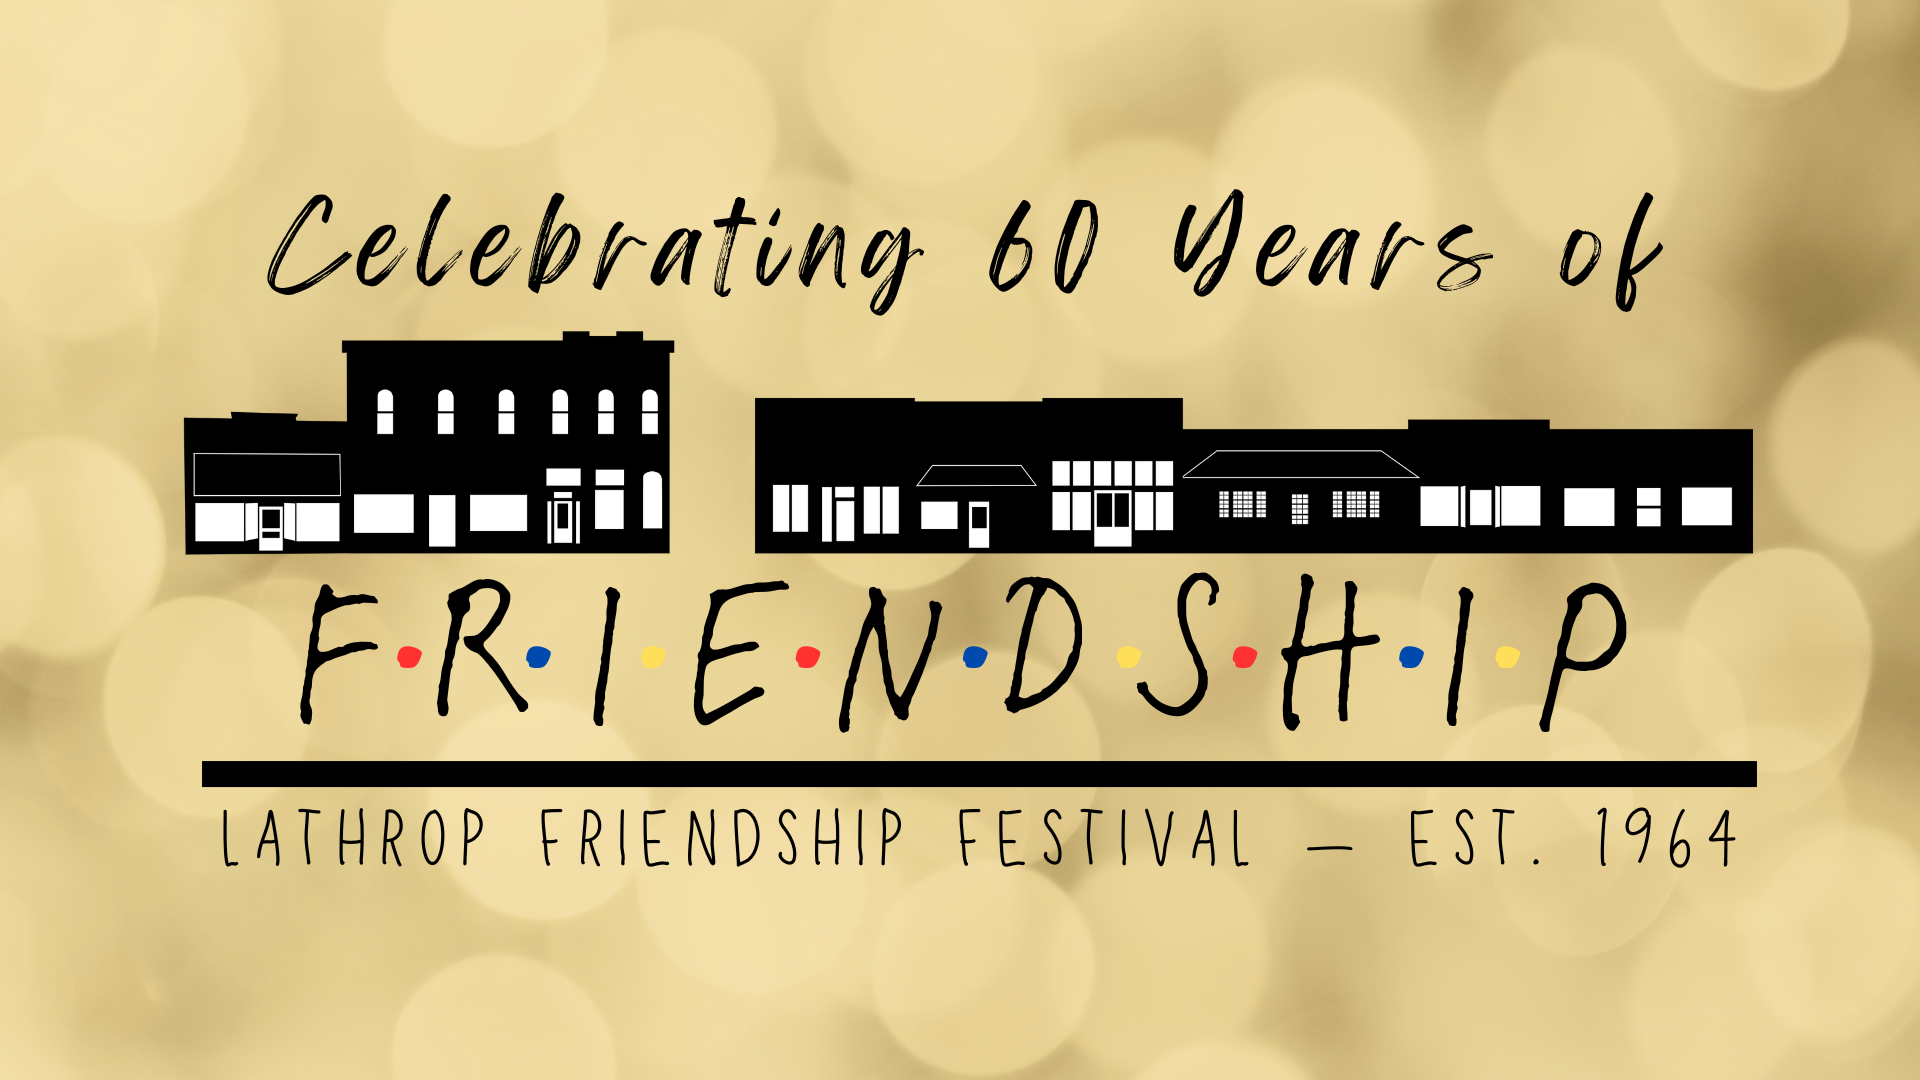 Friendship Festival (Lathrop) image